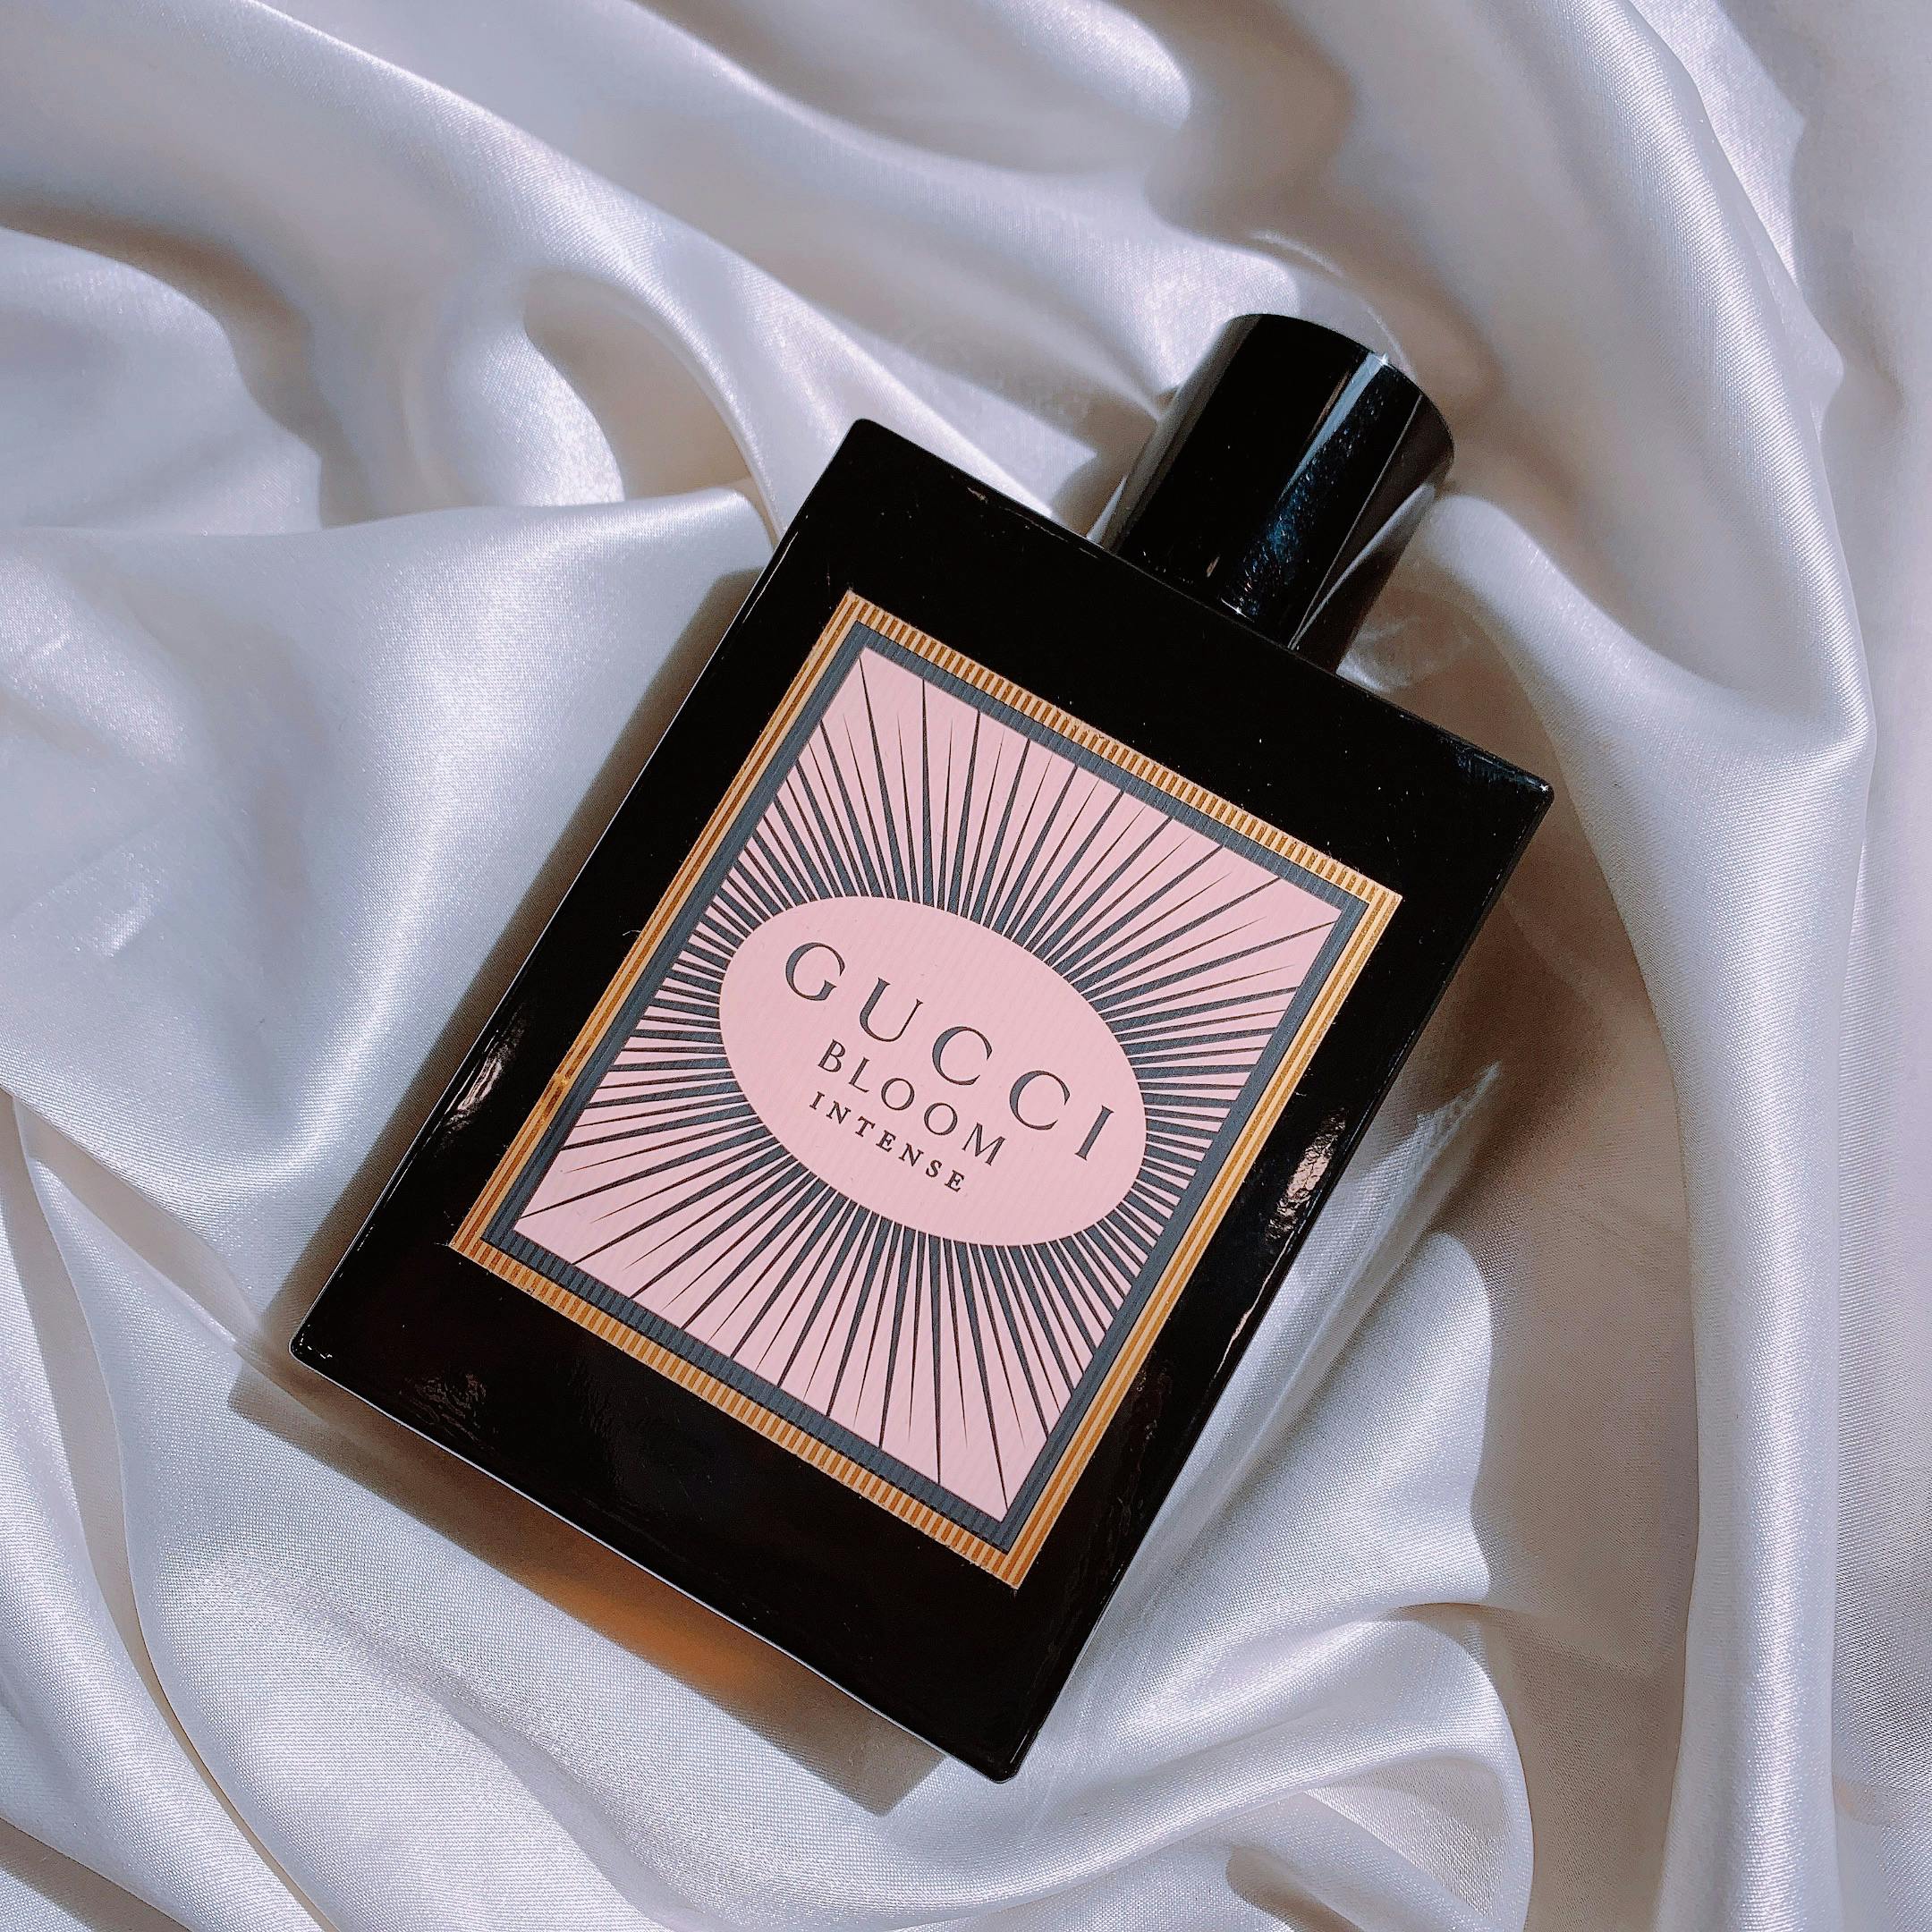 Gucci Bloom EDP Intense | My Perfume Shop Australia